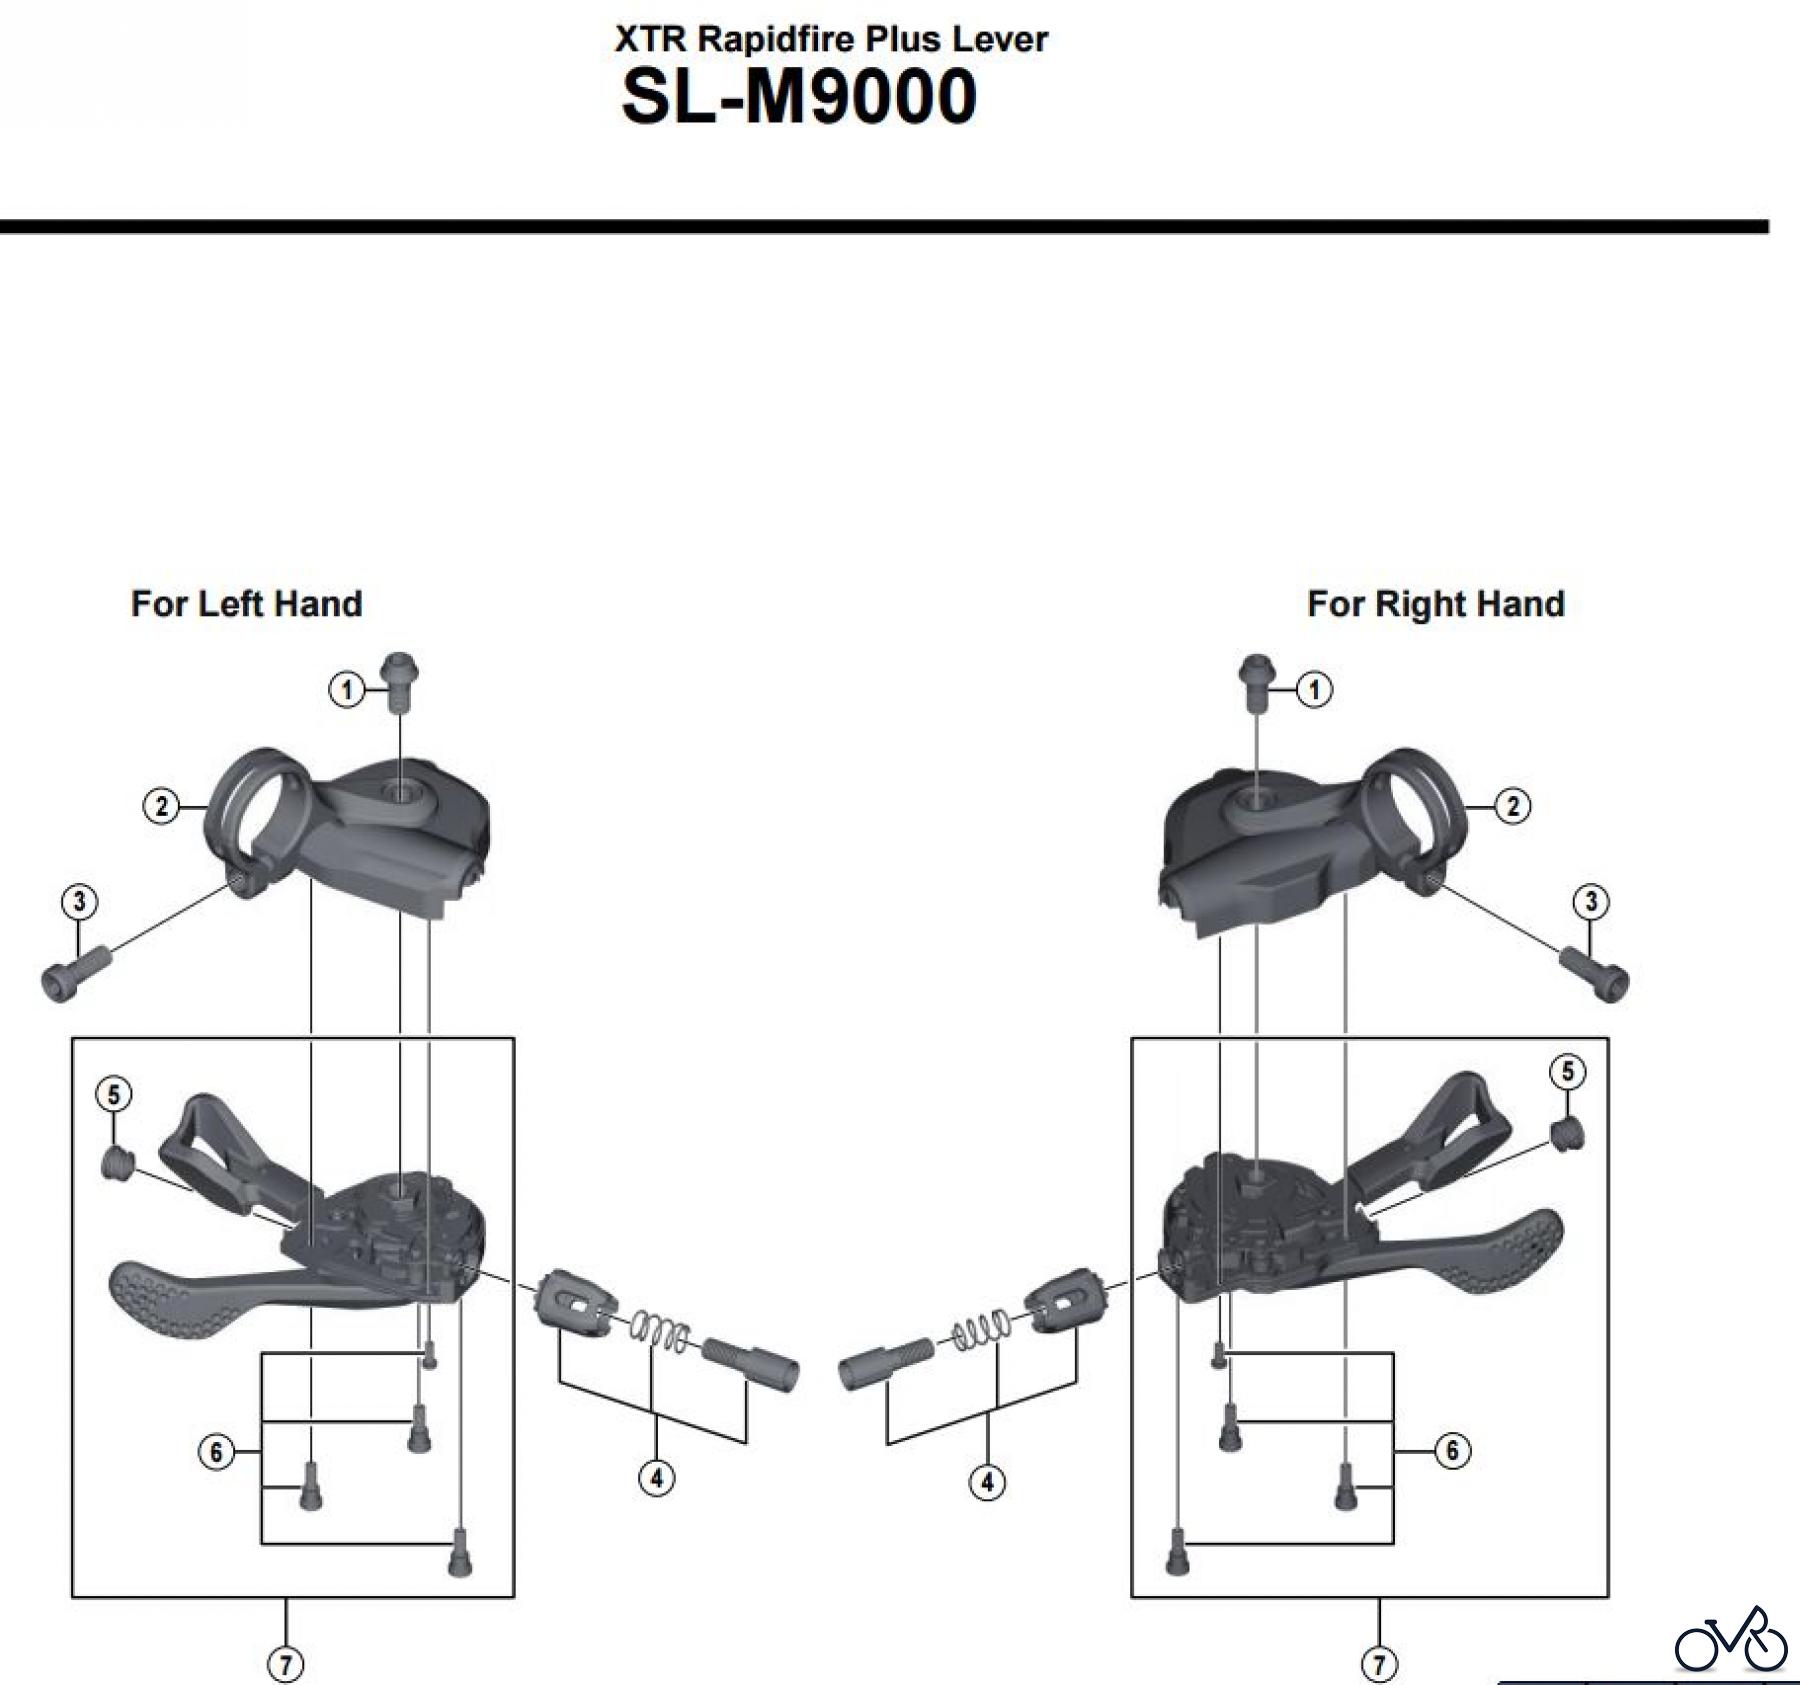  Shimano SL Shift Lever - Schalthebel SL-M9000 XTR Rapidfire Plus Lever